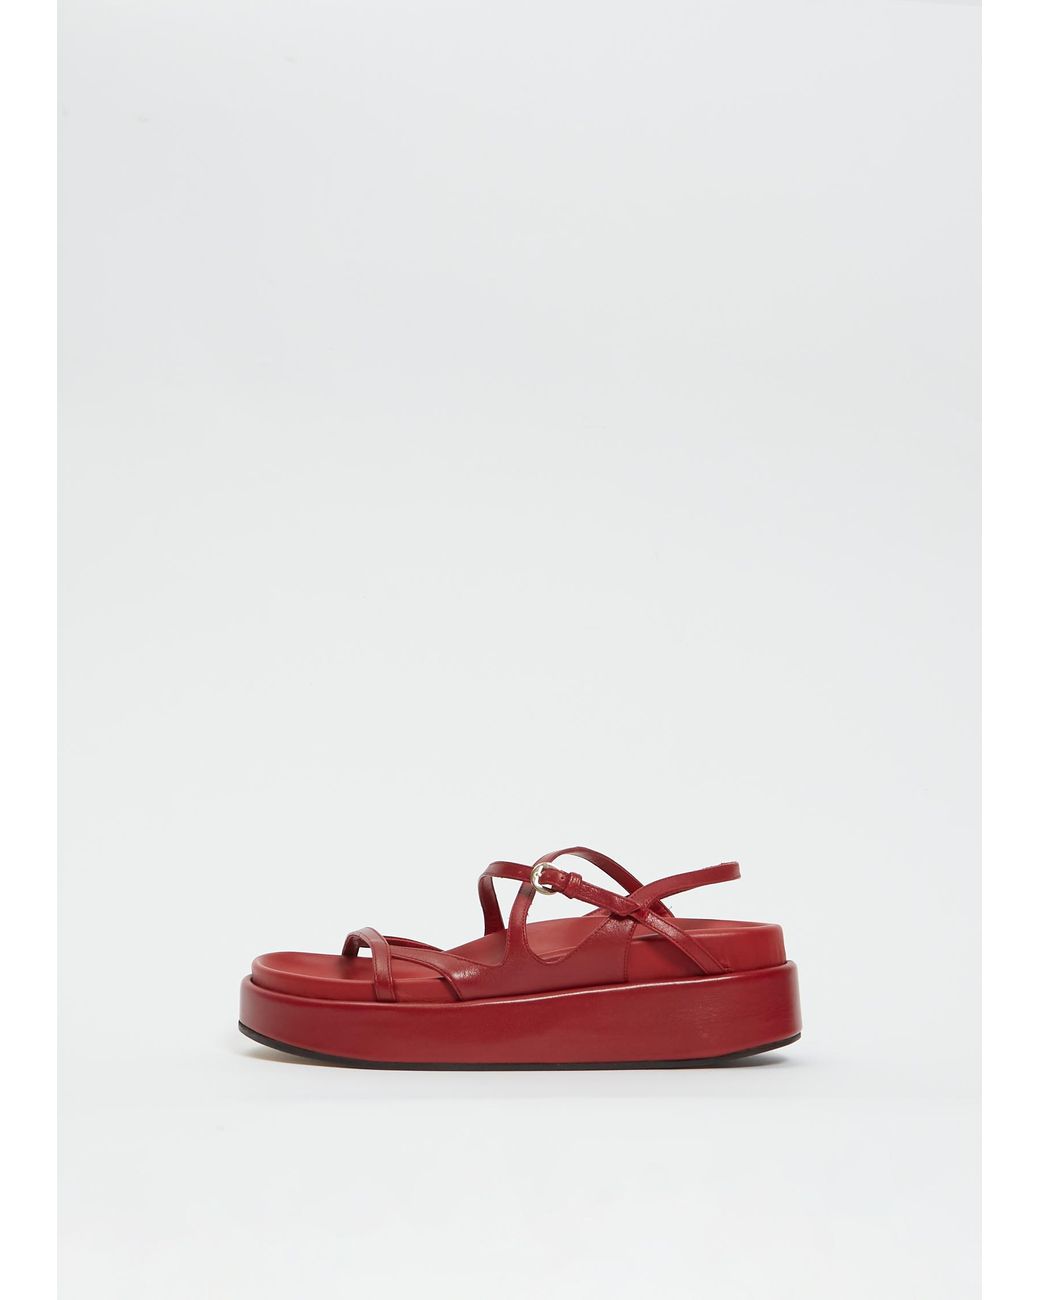 Dries Van Noten Strappy Sandals in Red | Lyst UK